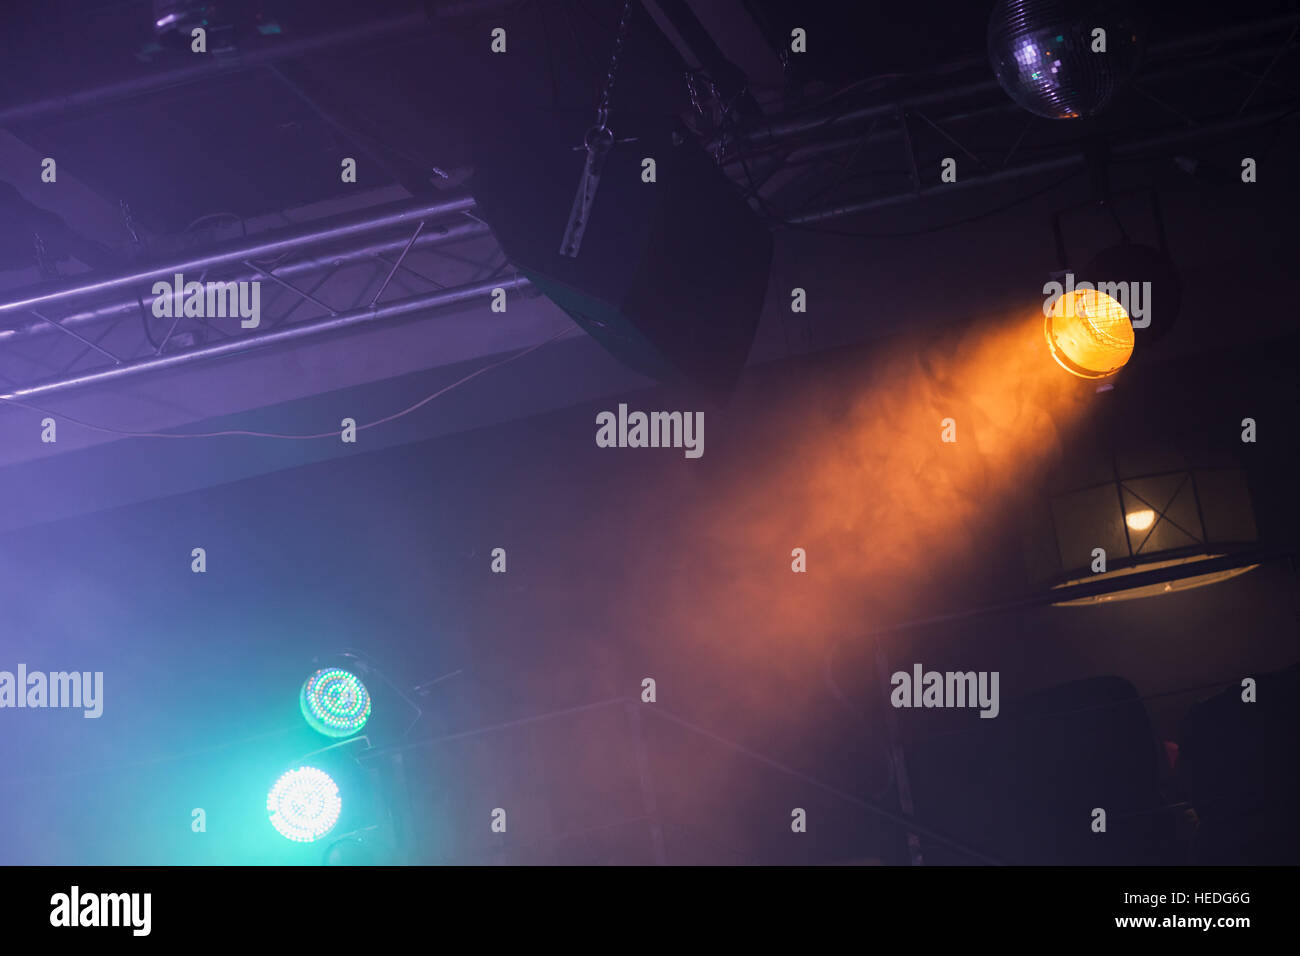 Spot lights over dark ceiling background, rock music concert stage illumination equipment Stock Photo